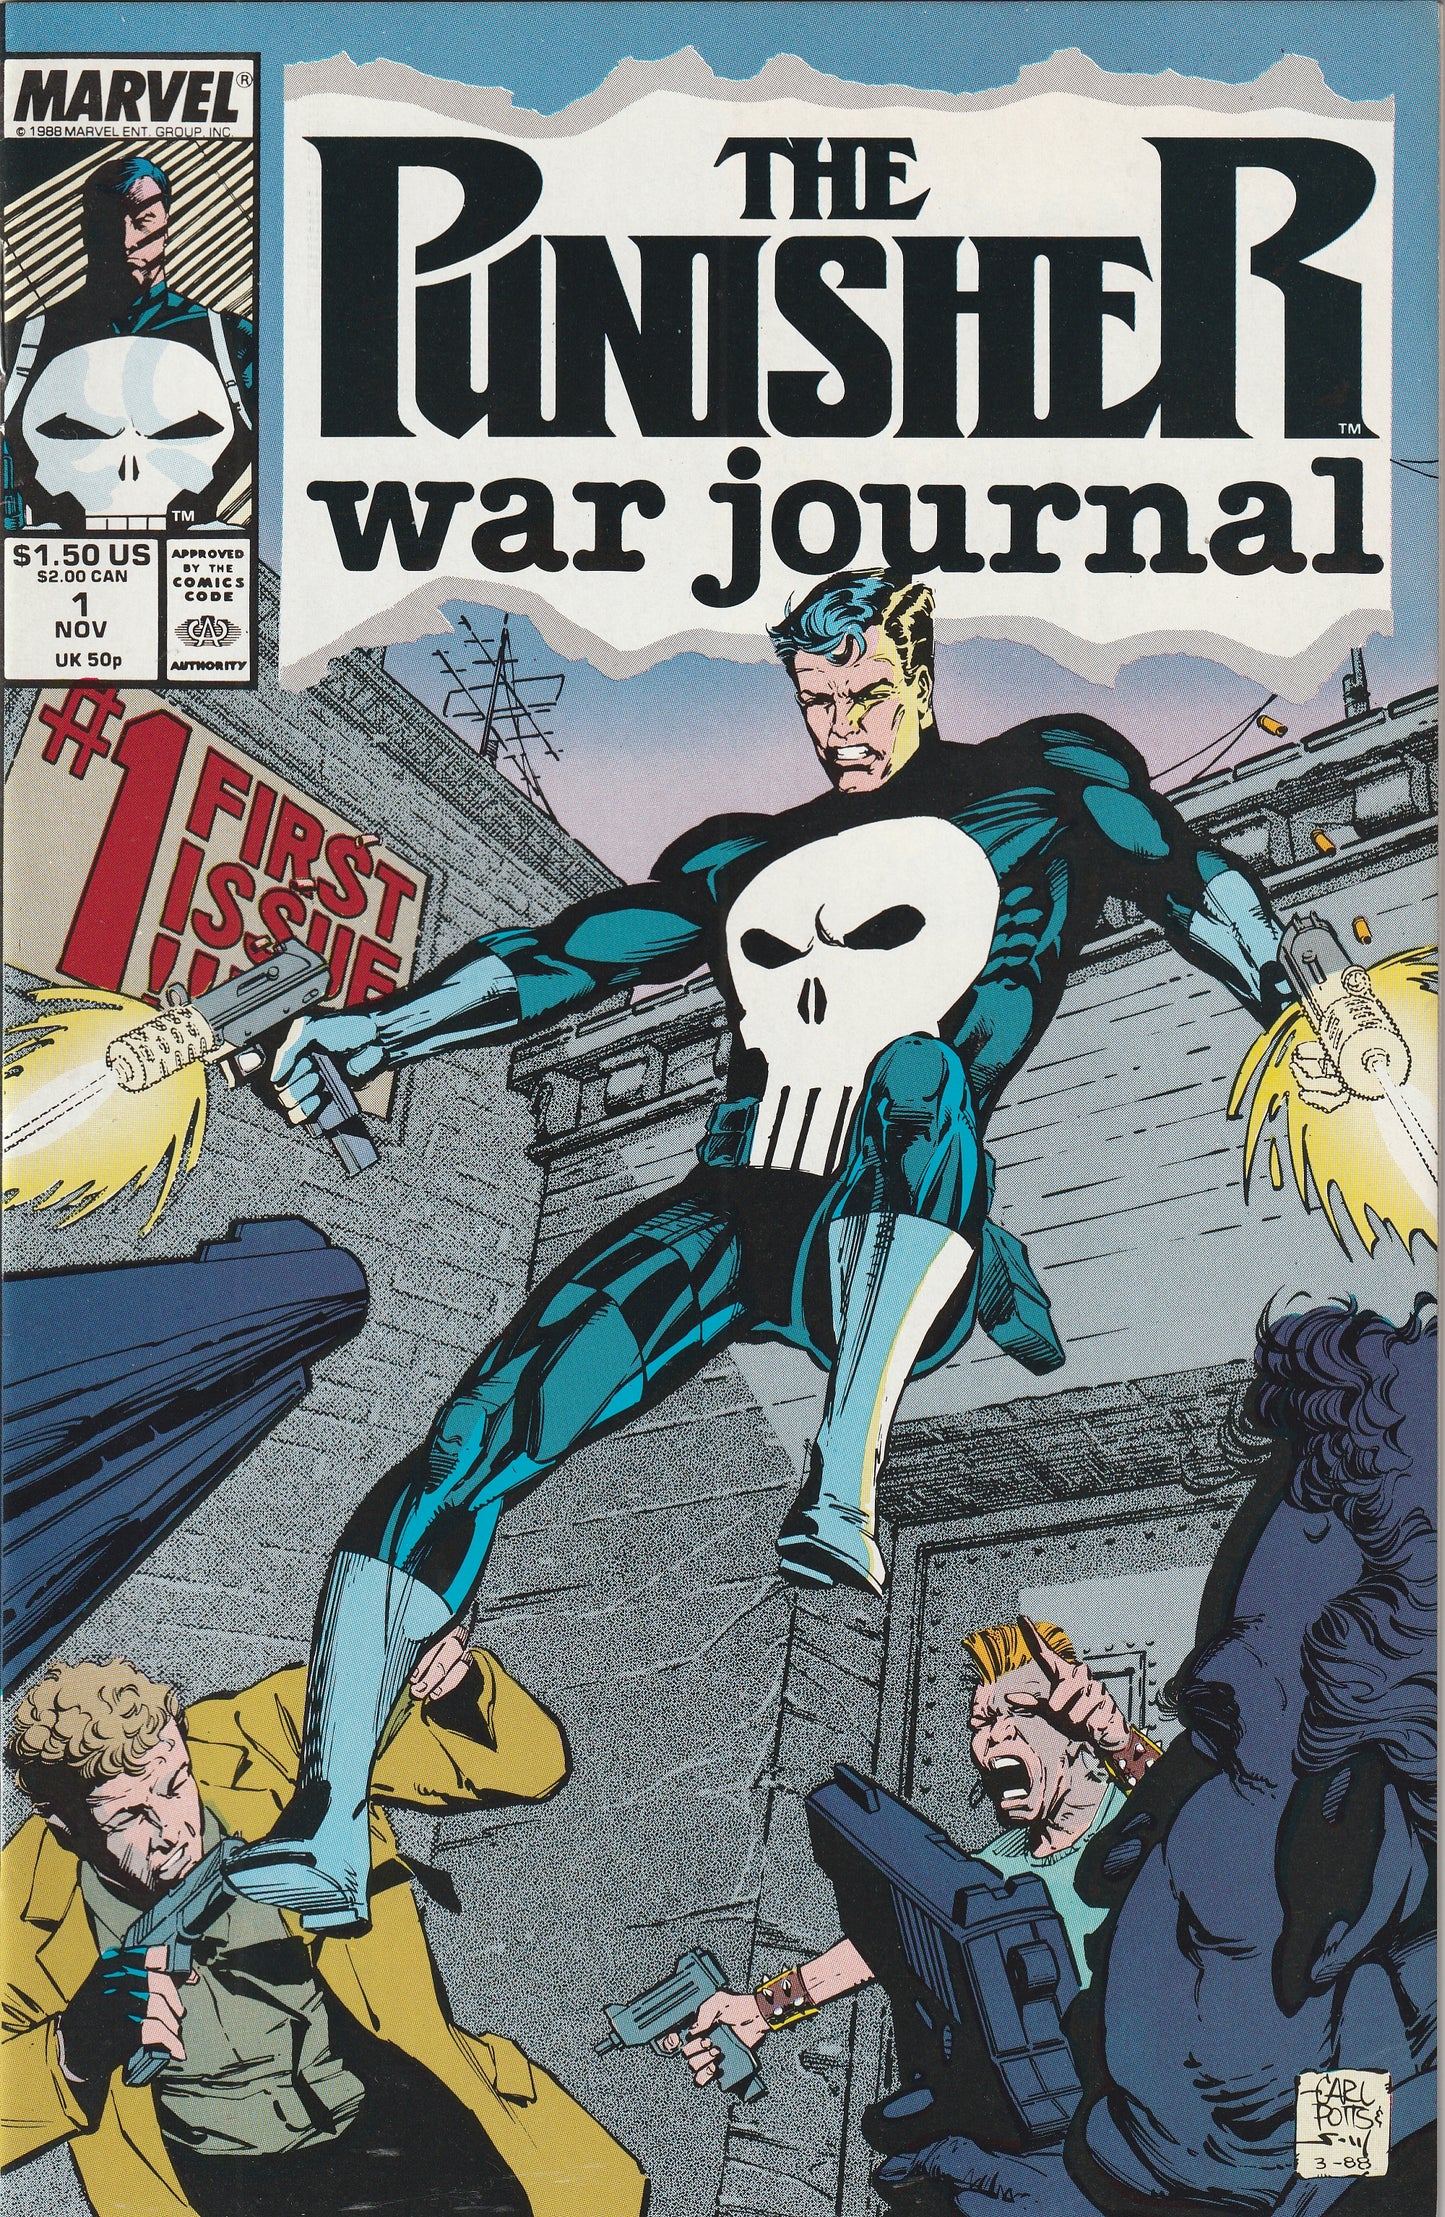 Punisher War Journal #1 (1988) - Jim Lee cover